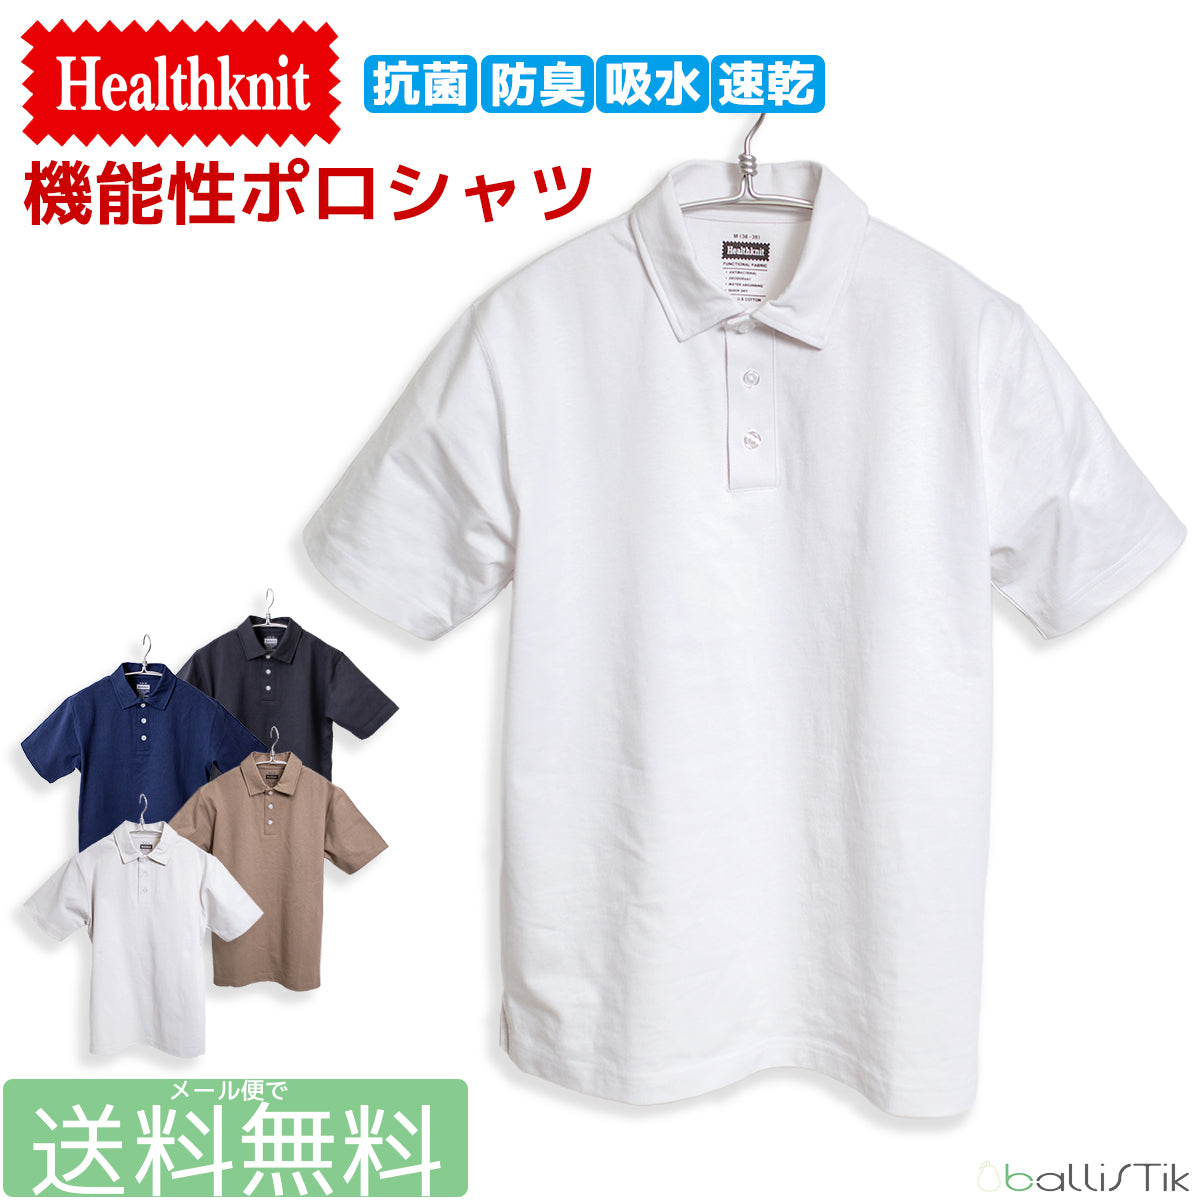 Healthknit(ヘルスニット)/ポロシャツ/吸汗速乾/5804/メイン